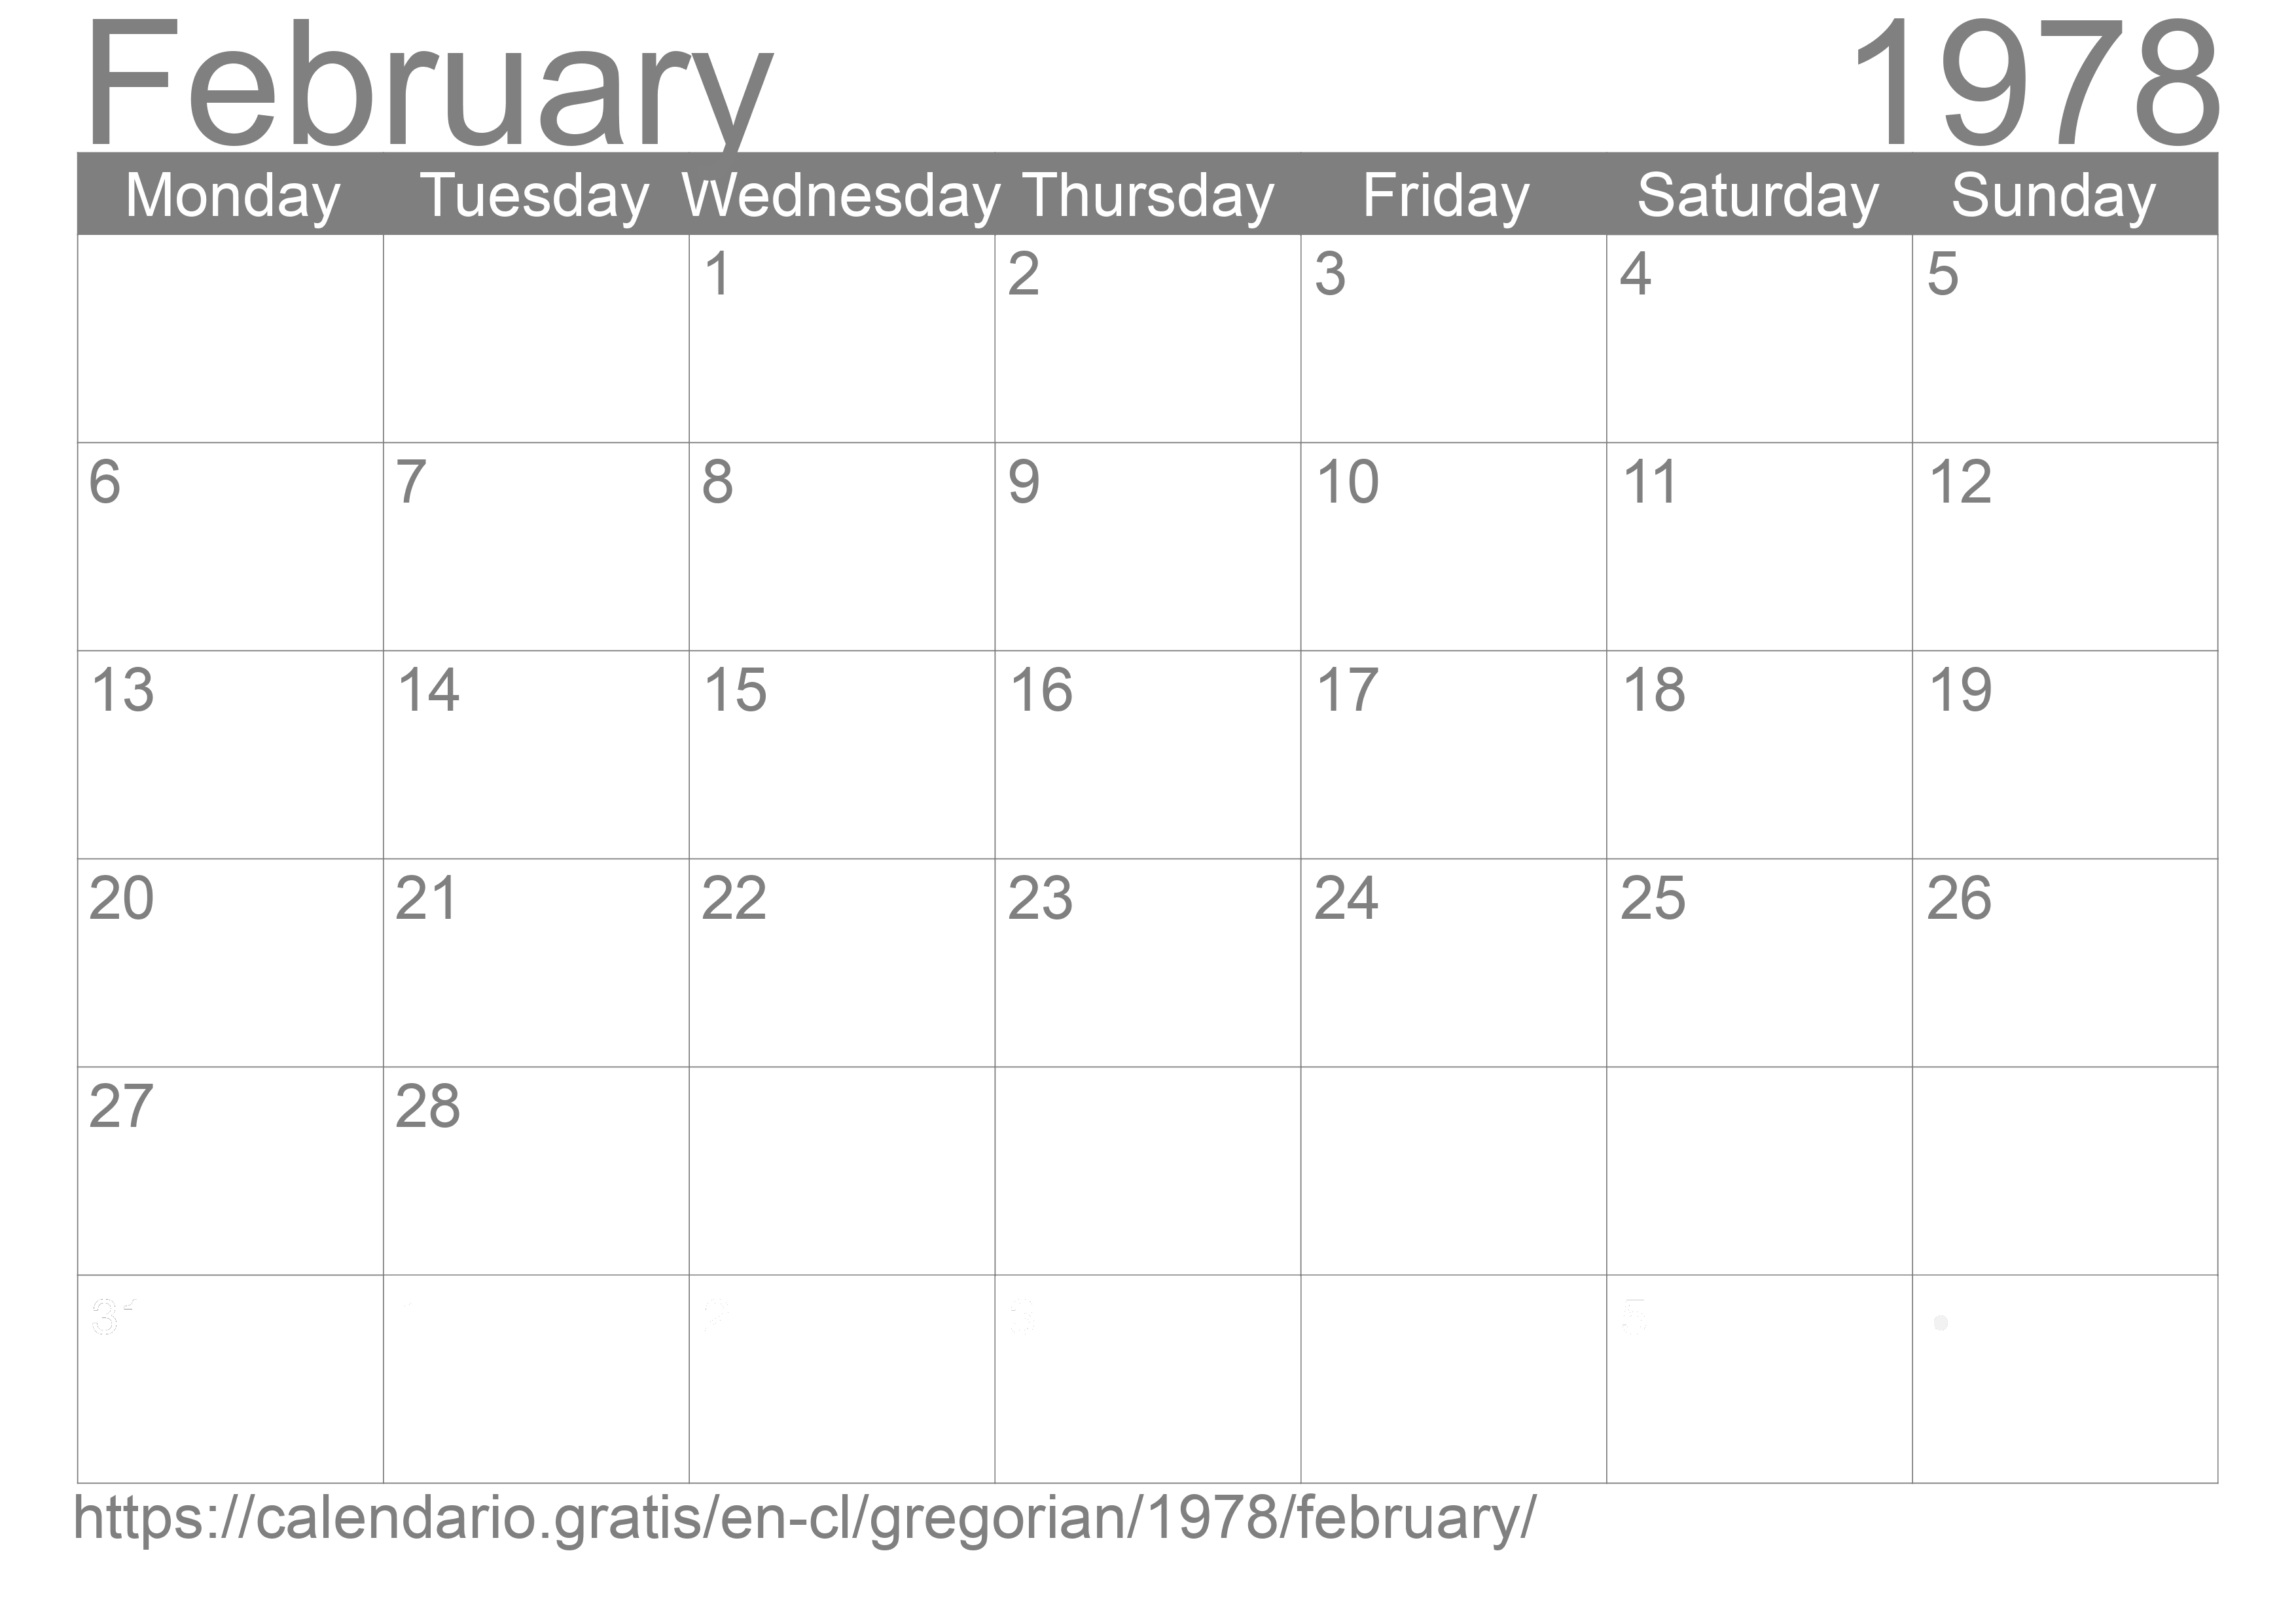 Calendar February 1978 to print